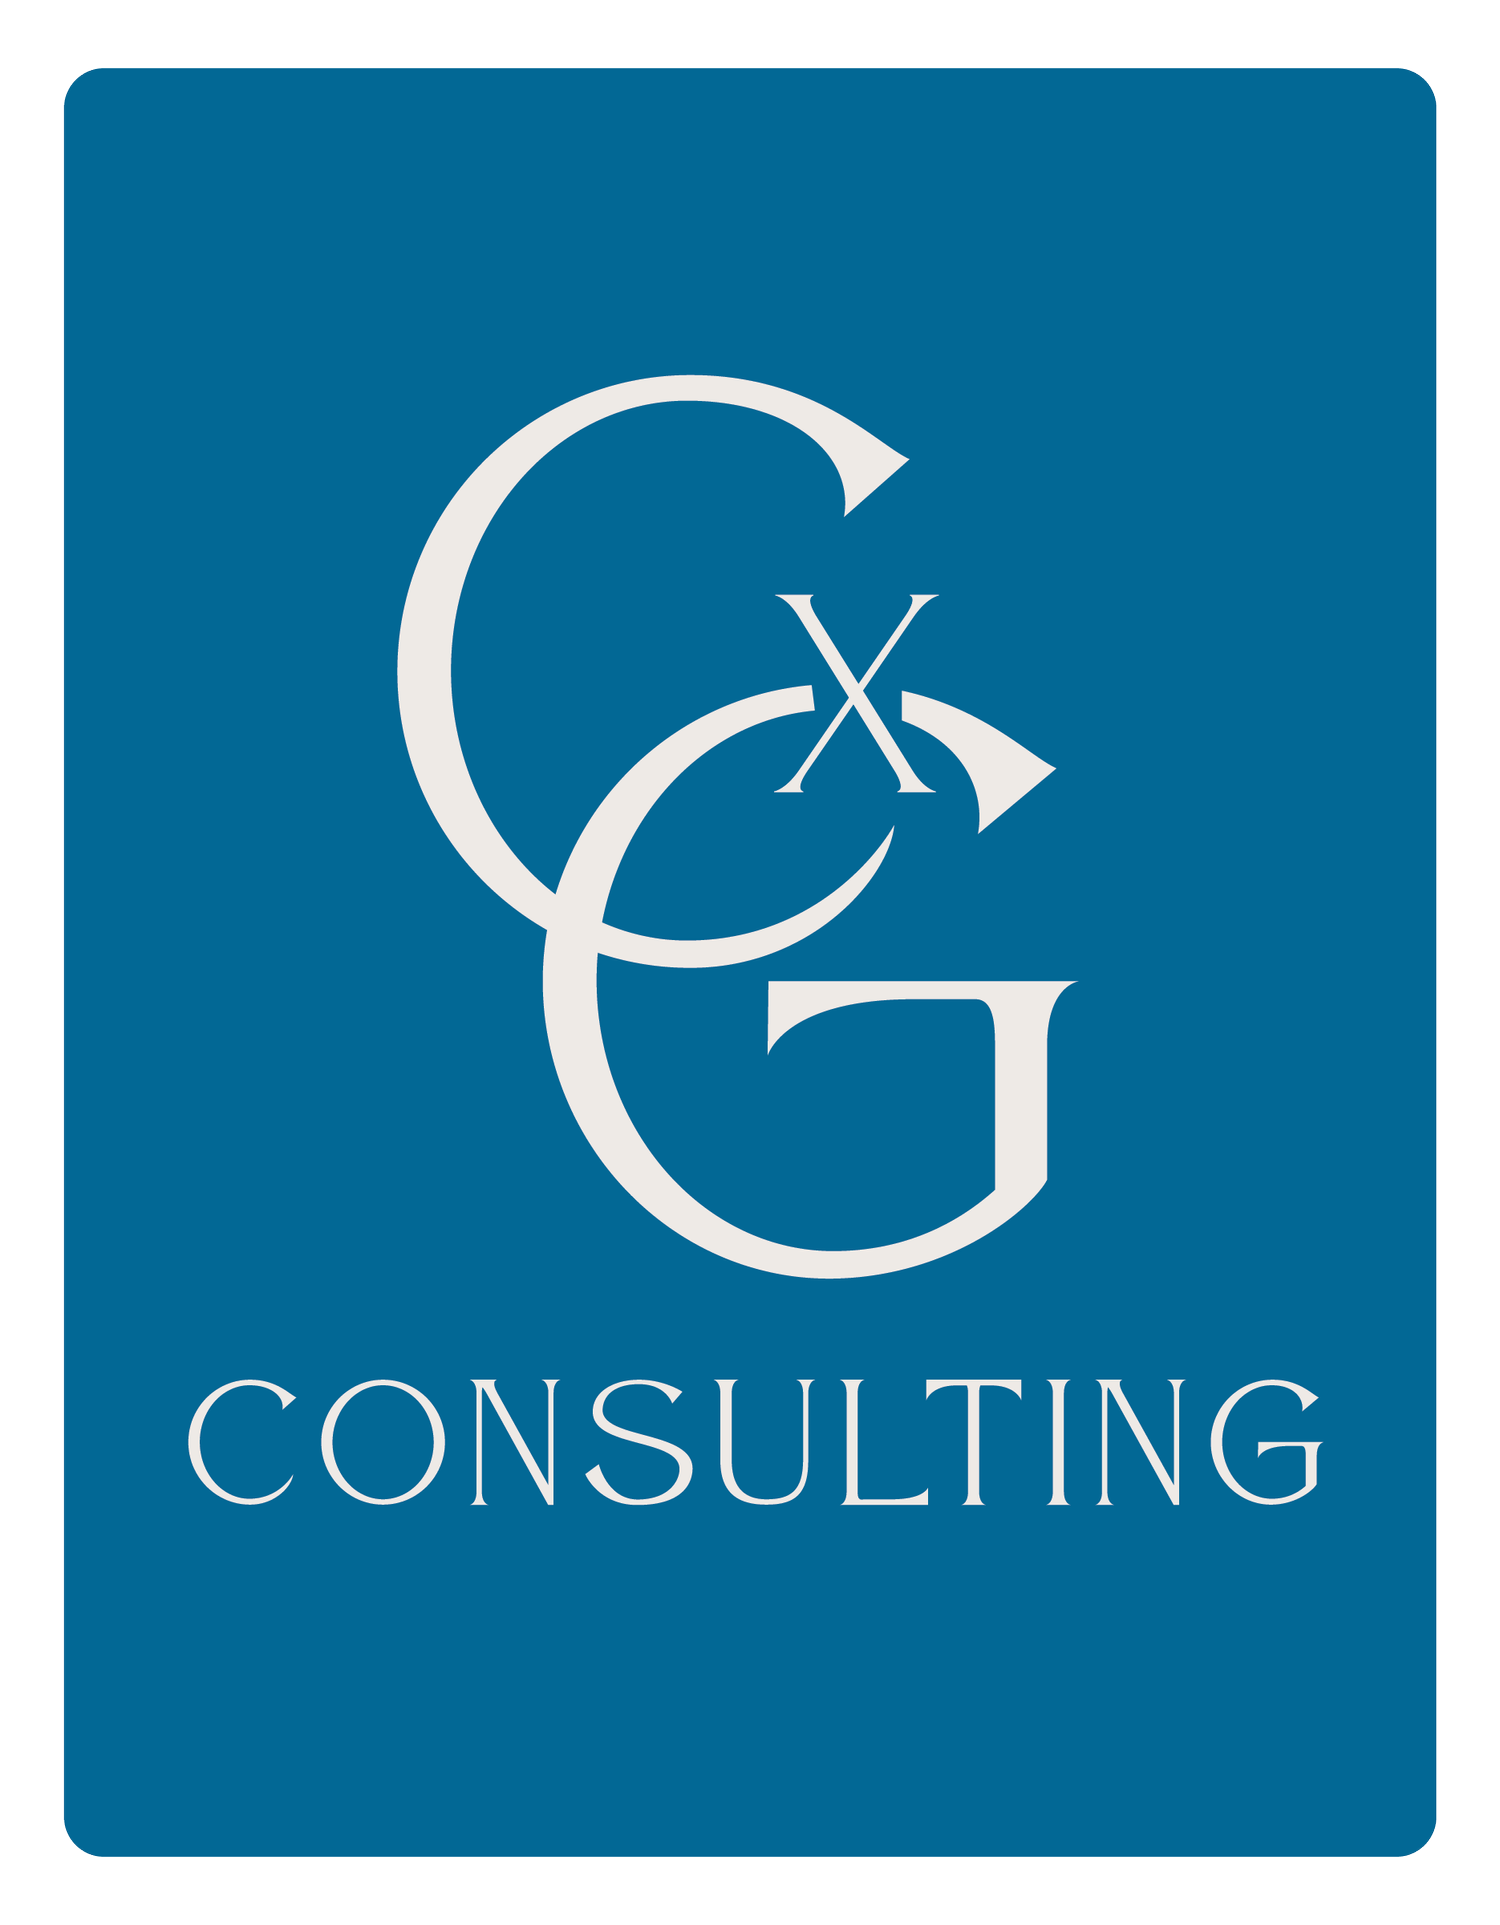 CxG Consulting